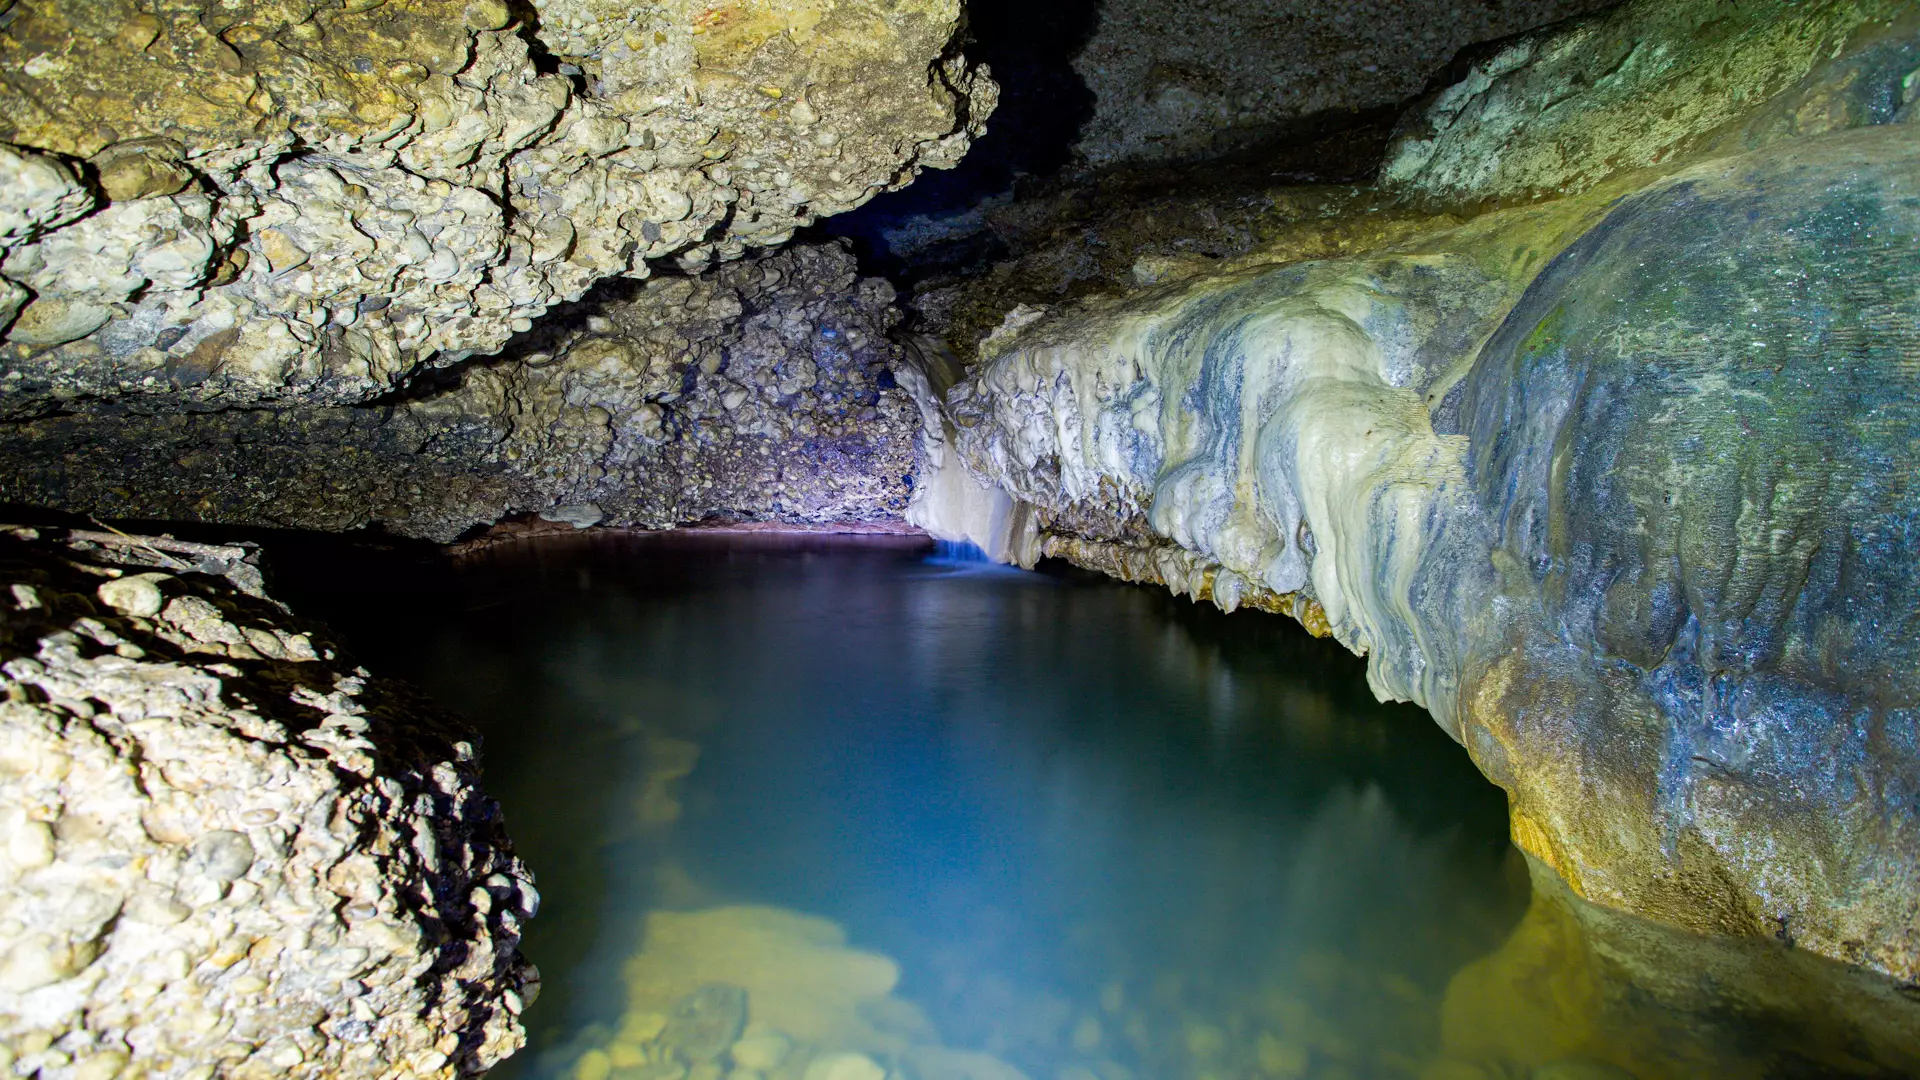 Nazodelao Cave